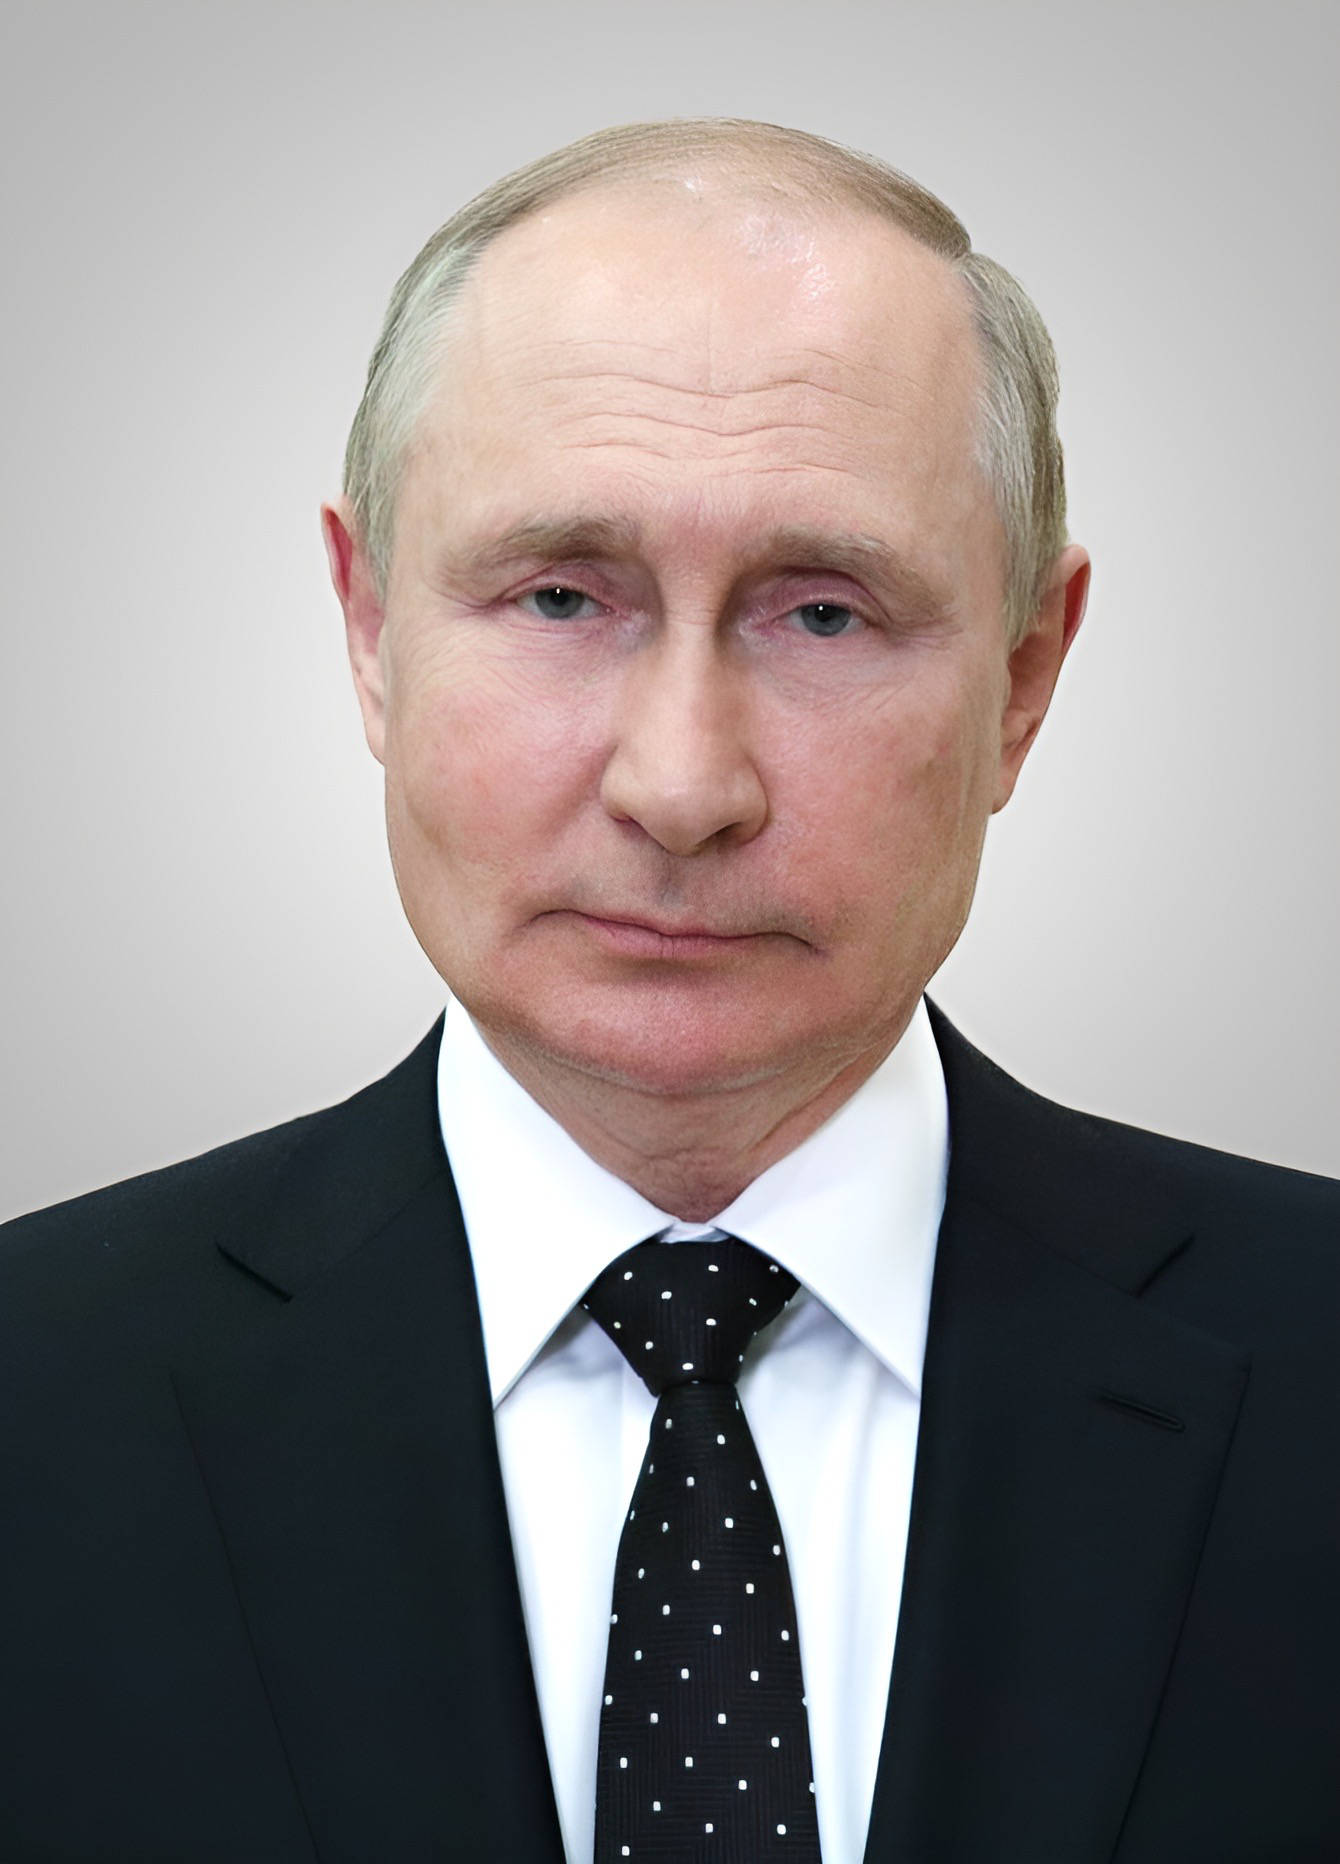 Vladimir Putin Portrait Photo Wallpaper